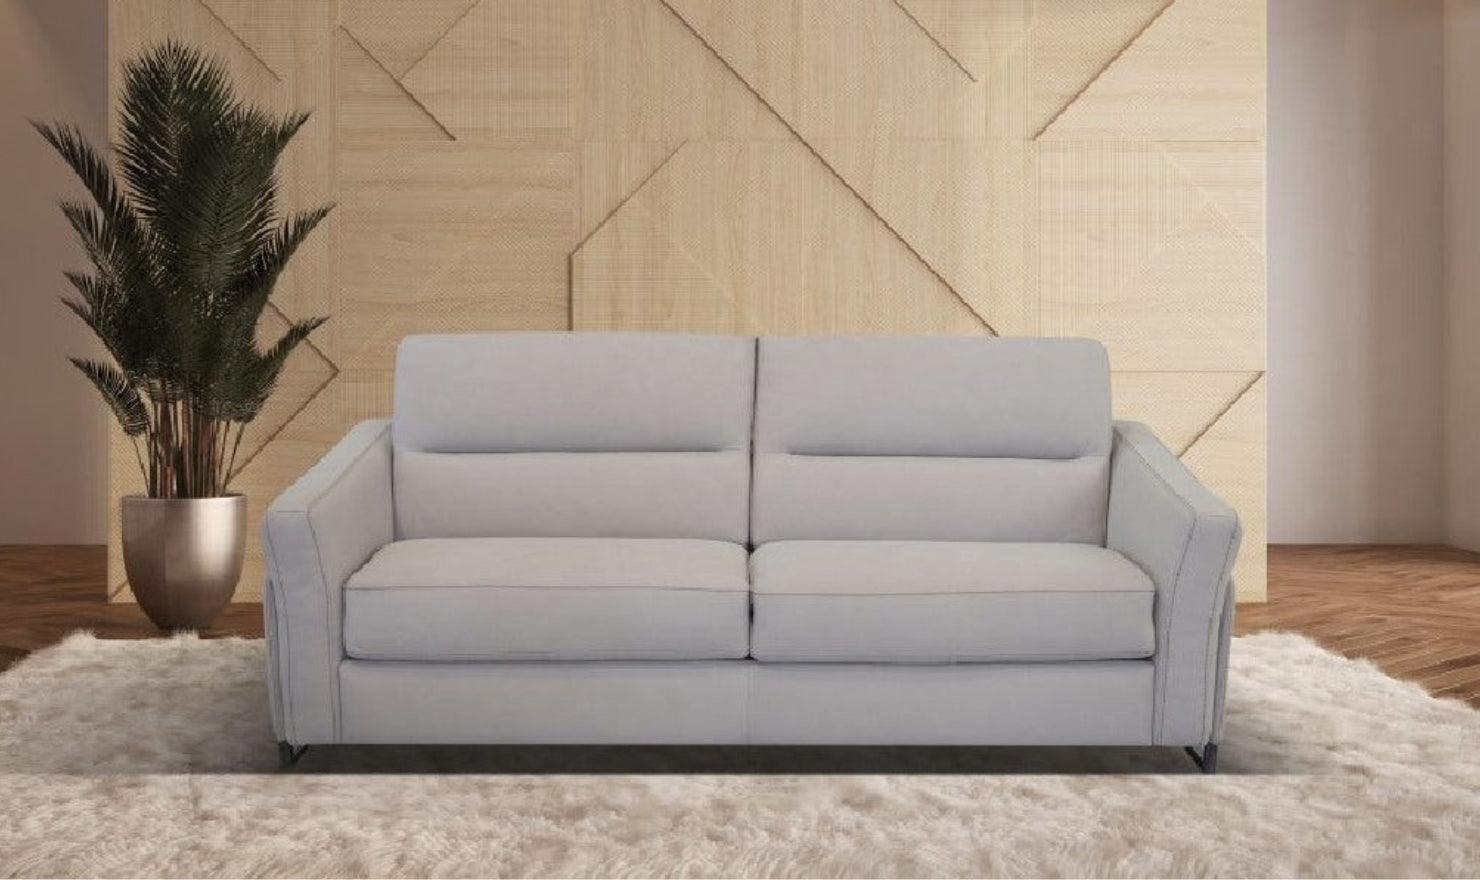 Pompea Luxury Leather Maxi Sofa Bed